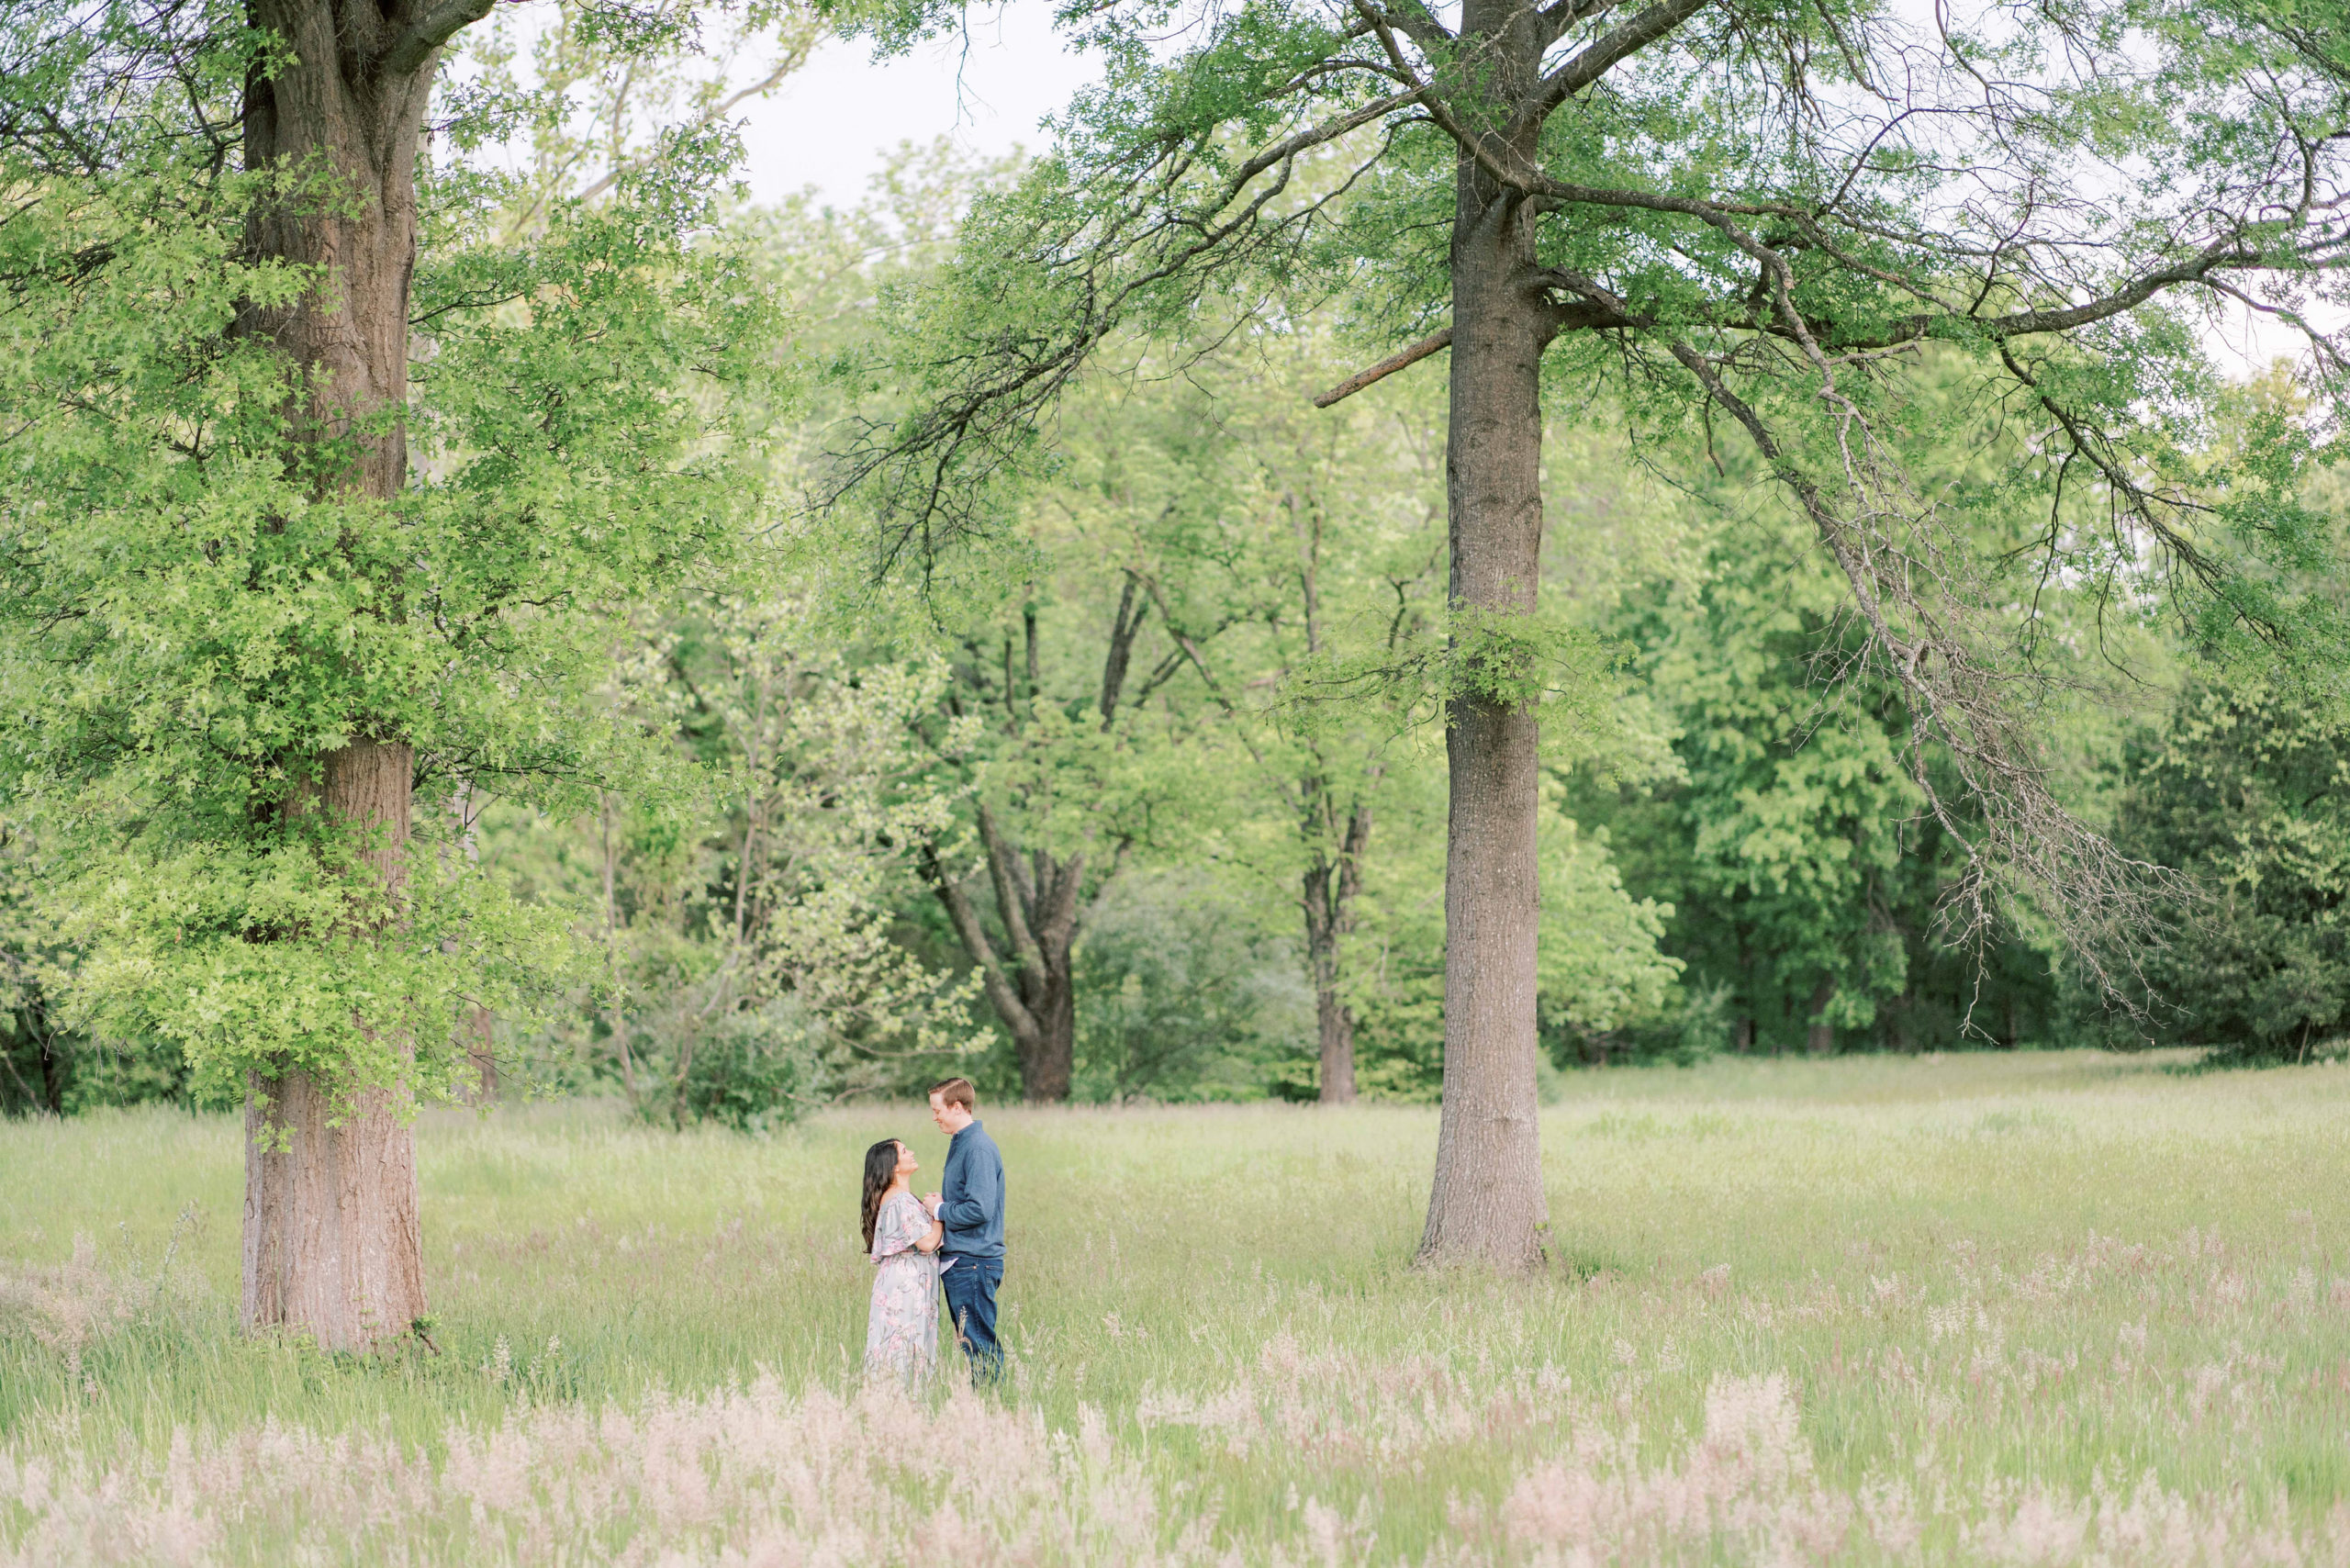 A romantic summer engagement session photographed at sunrise in Manassas Battlefield Park outside of Washington, DC.